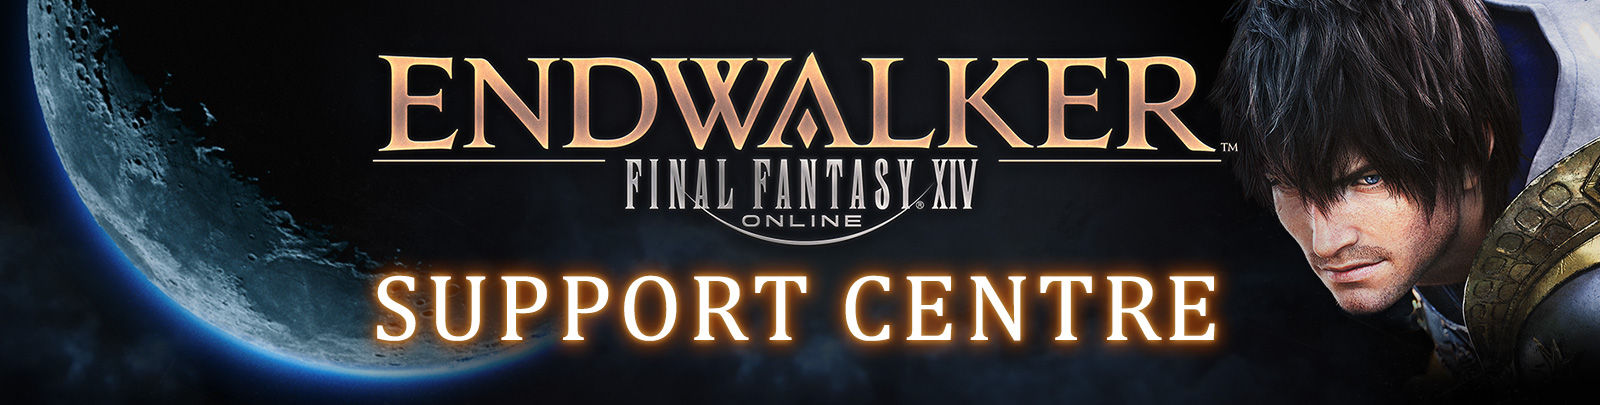 Final Fantasy XIV A Realm Reborn SECURITY TOKEN NEW SQUARENIX FF